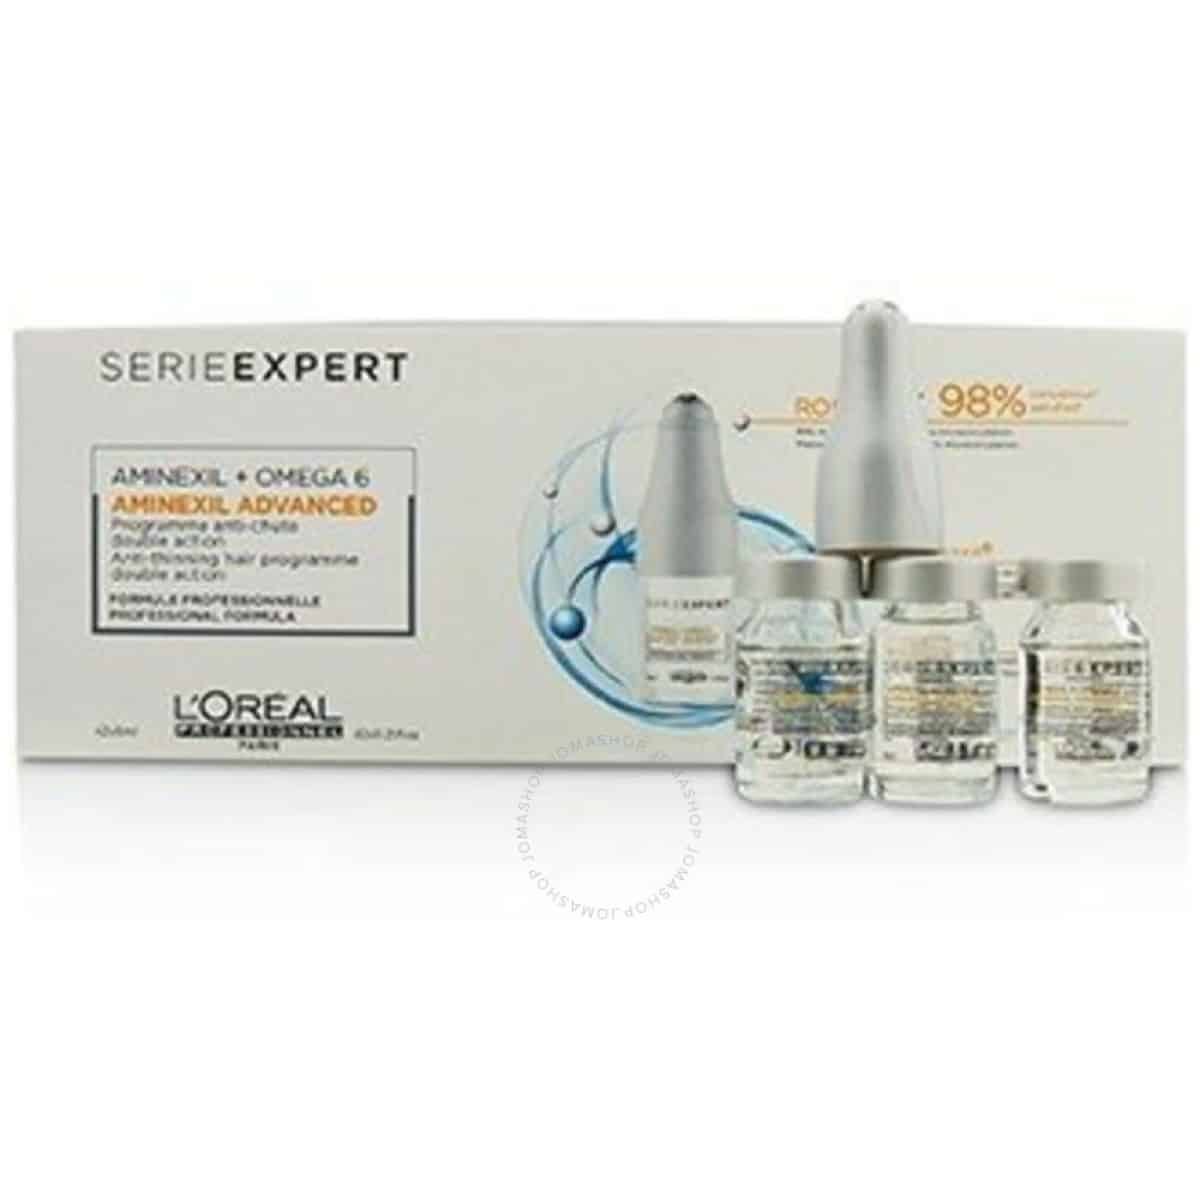 L'Oreal Professional Serie Expert Aminexil+Omega6 Hair Treatment 10X6Ml